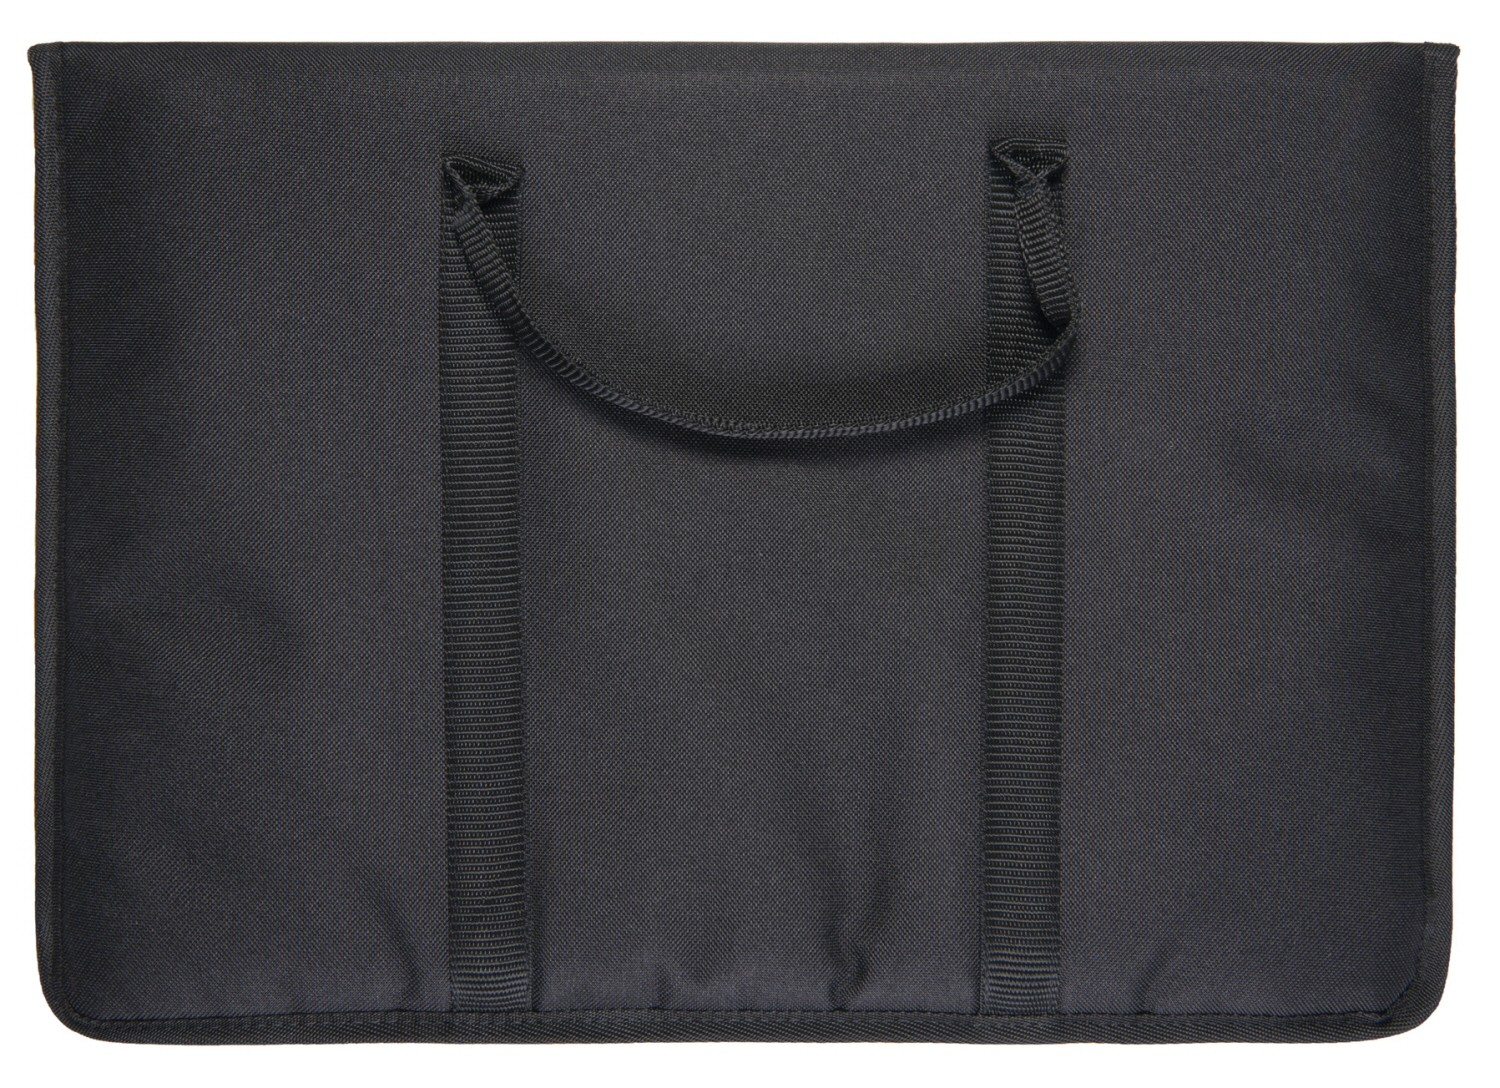 Disklabs Unbranded Laptop Shield RF Shielded Faraday Bag (LS1U)